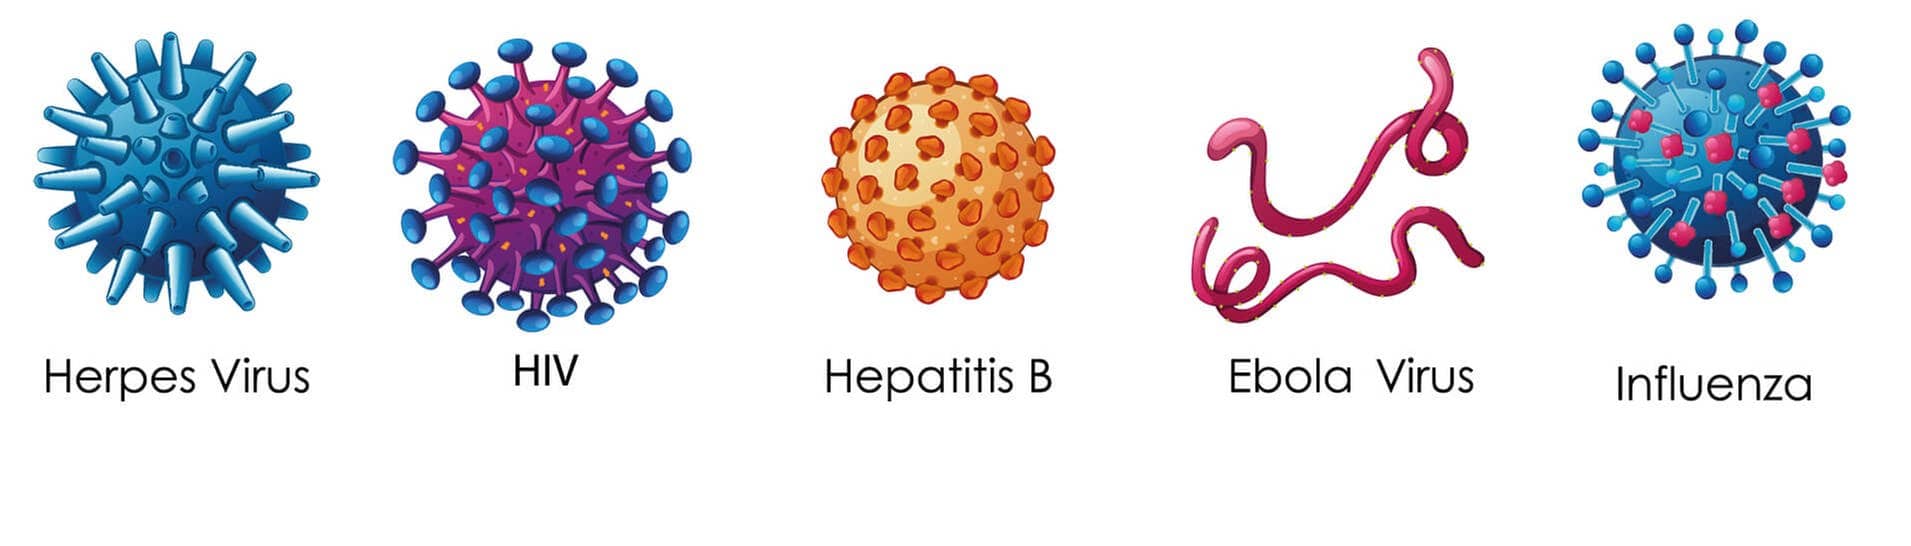 Formen verschiedener Virus-Arten: HIV, Ebola, Influenza, Herpes